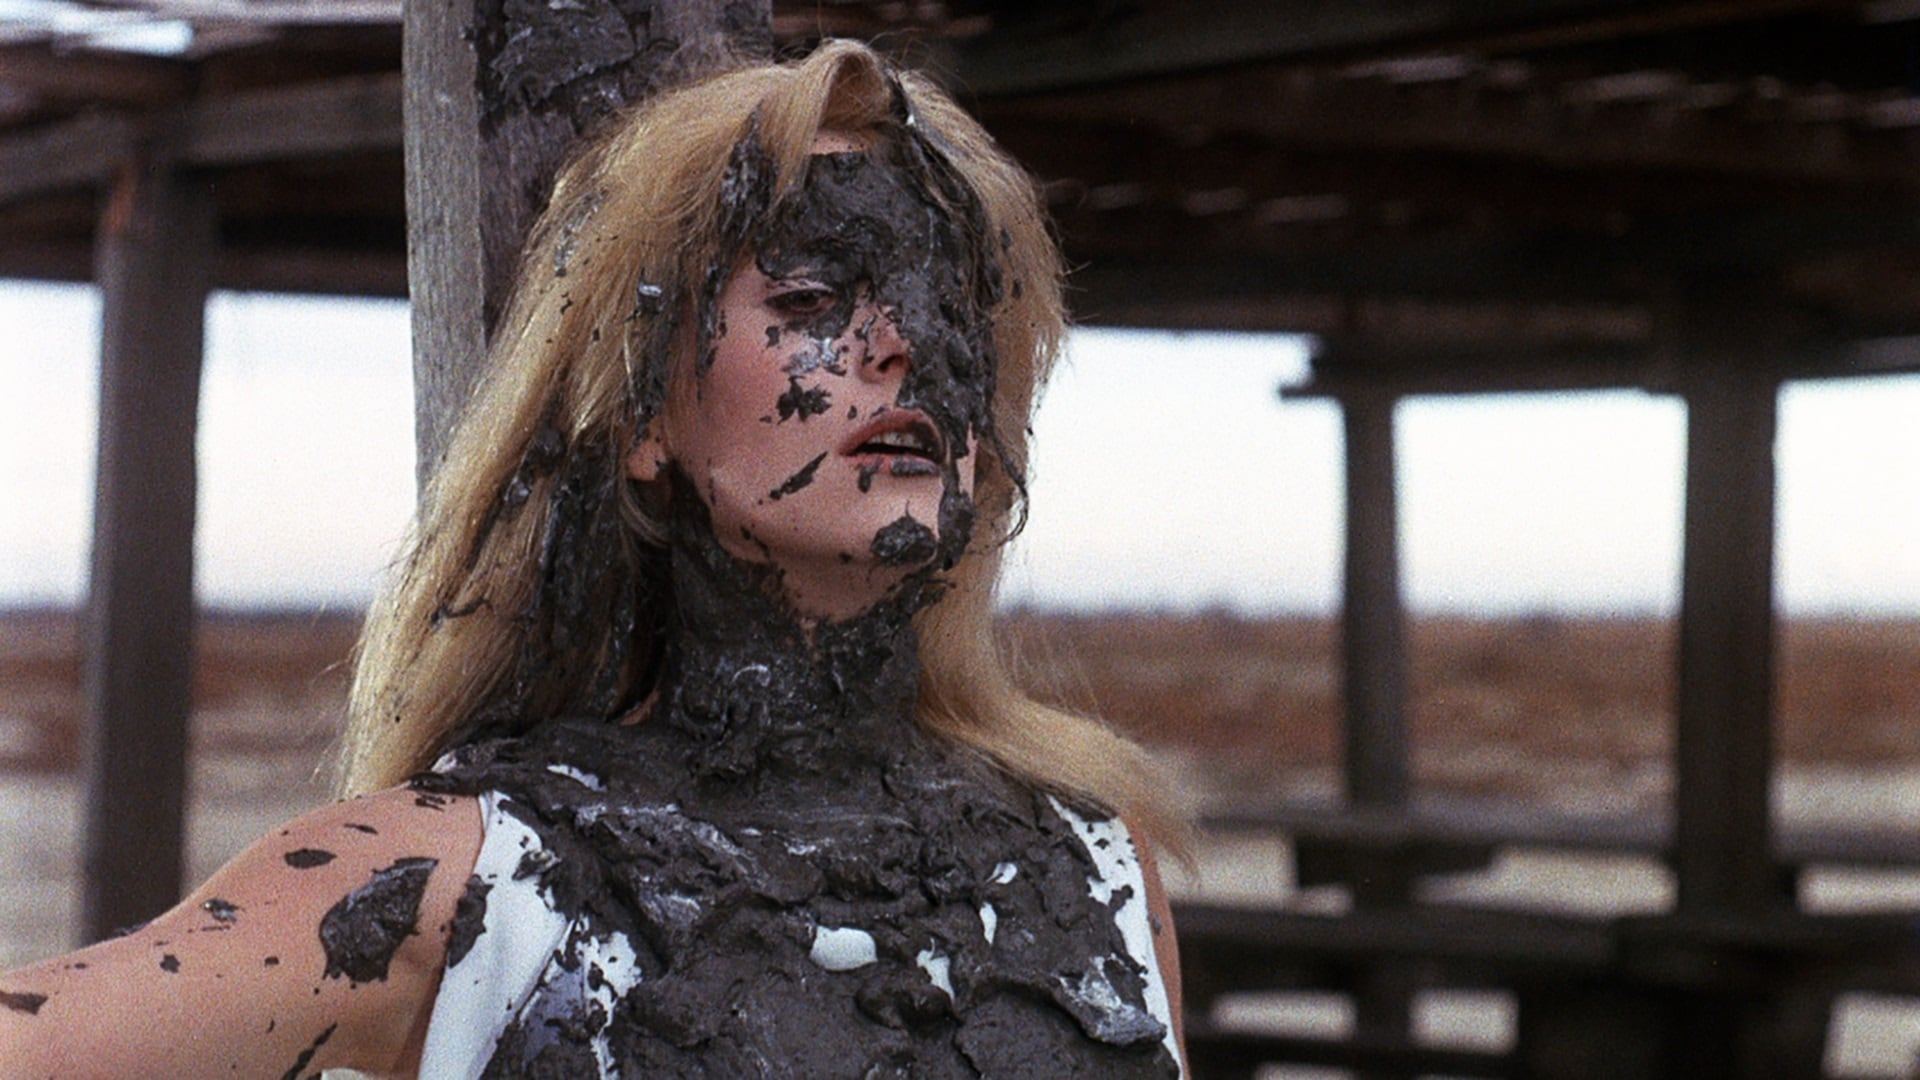 Catherine Deneuve in Bella di giorno, 1967